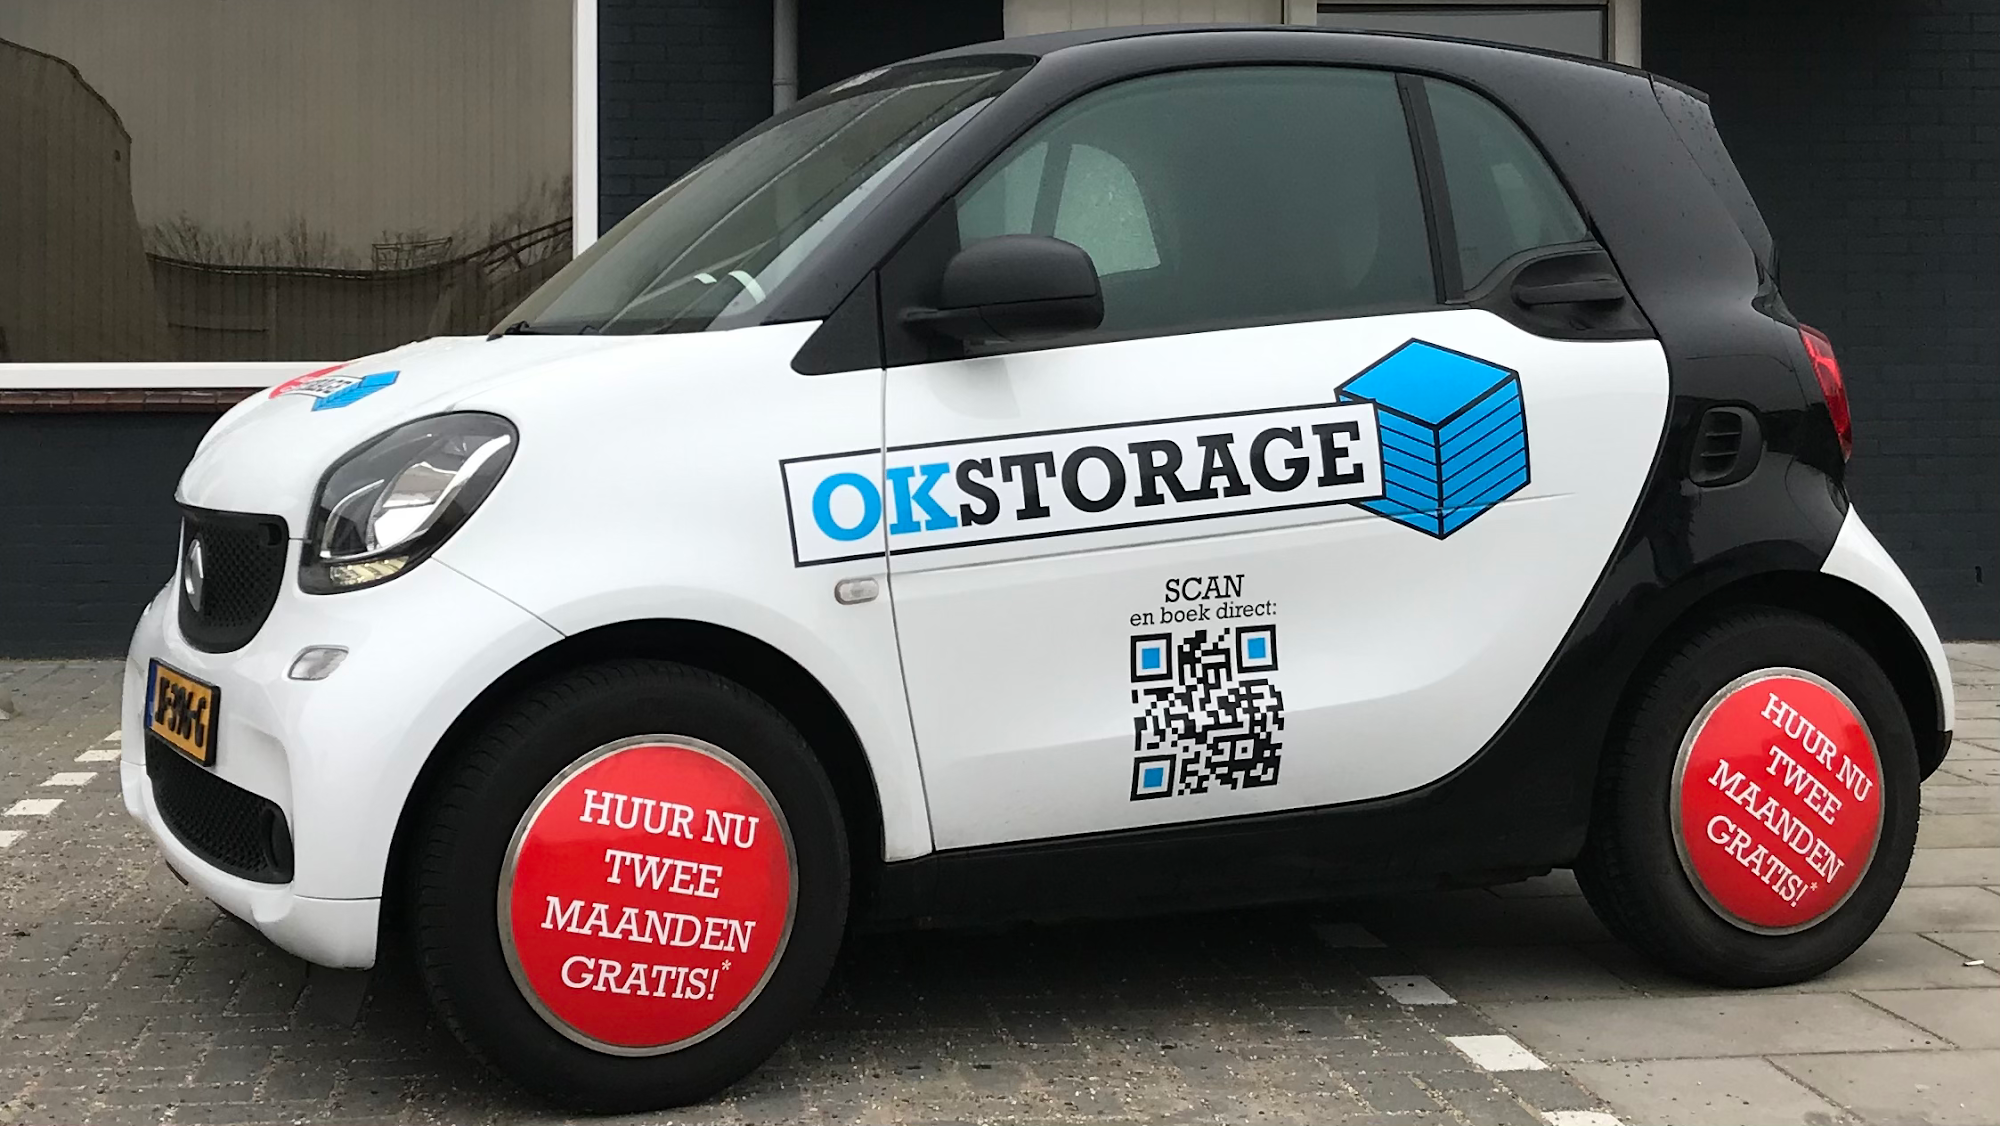 OK Storage - Opslagruimte huren & Self Storage in Weesp